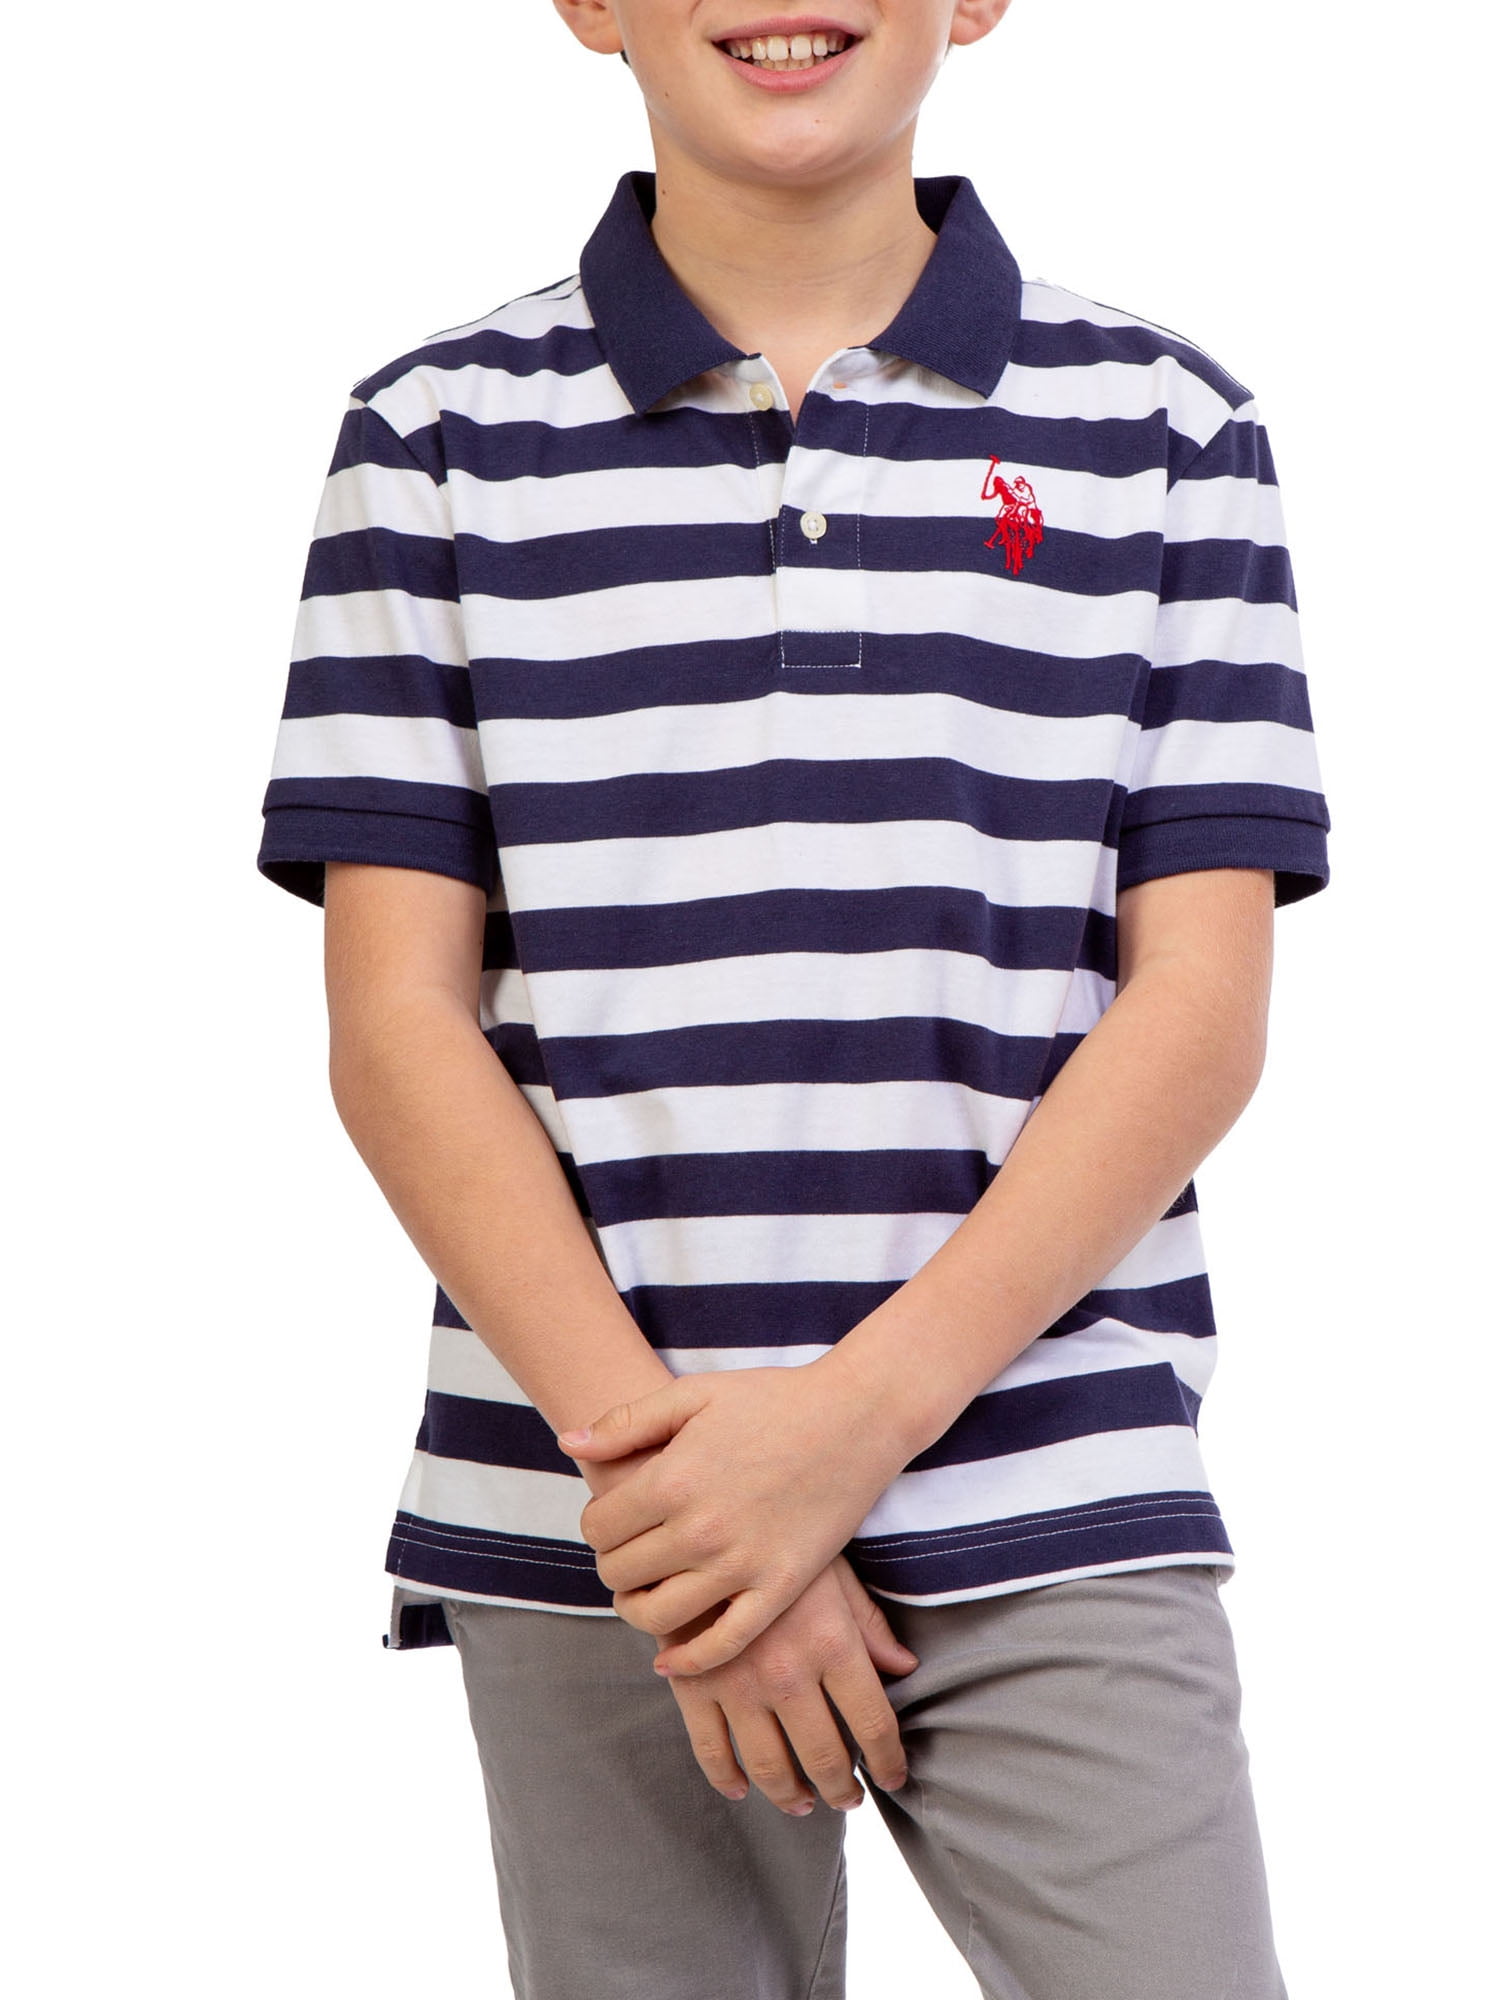 Boys Short Sleeve Striped Woven Shirt Polo Assn U.S